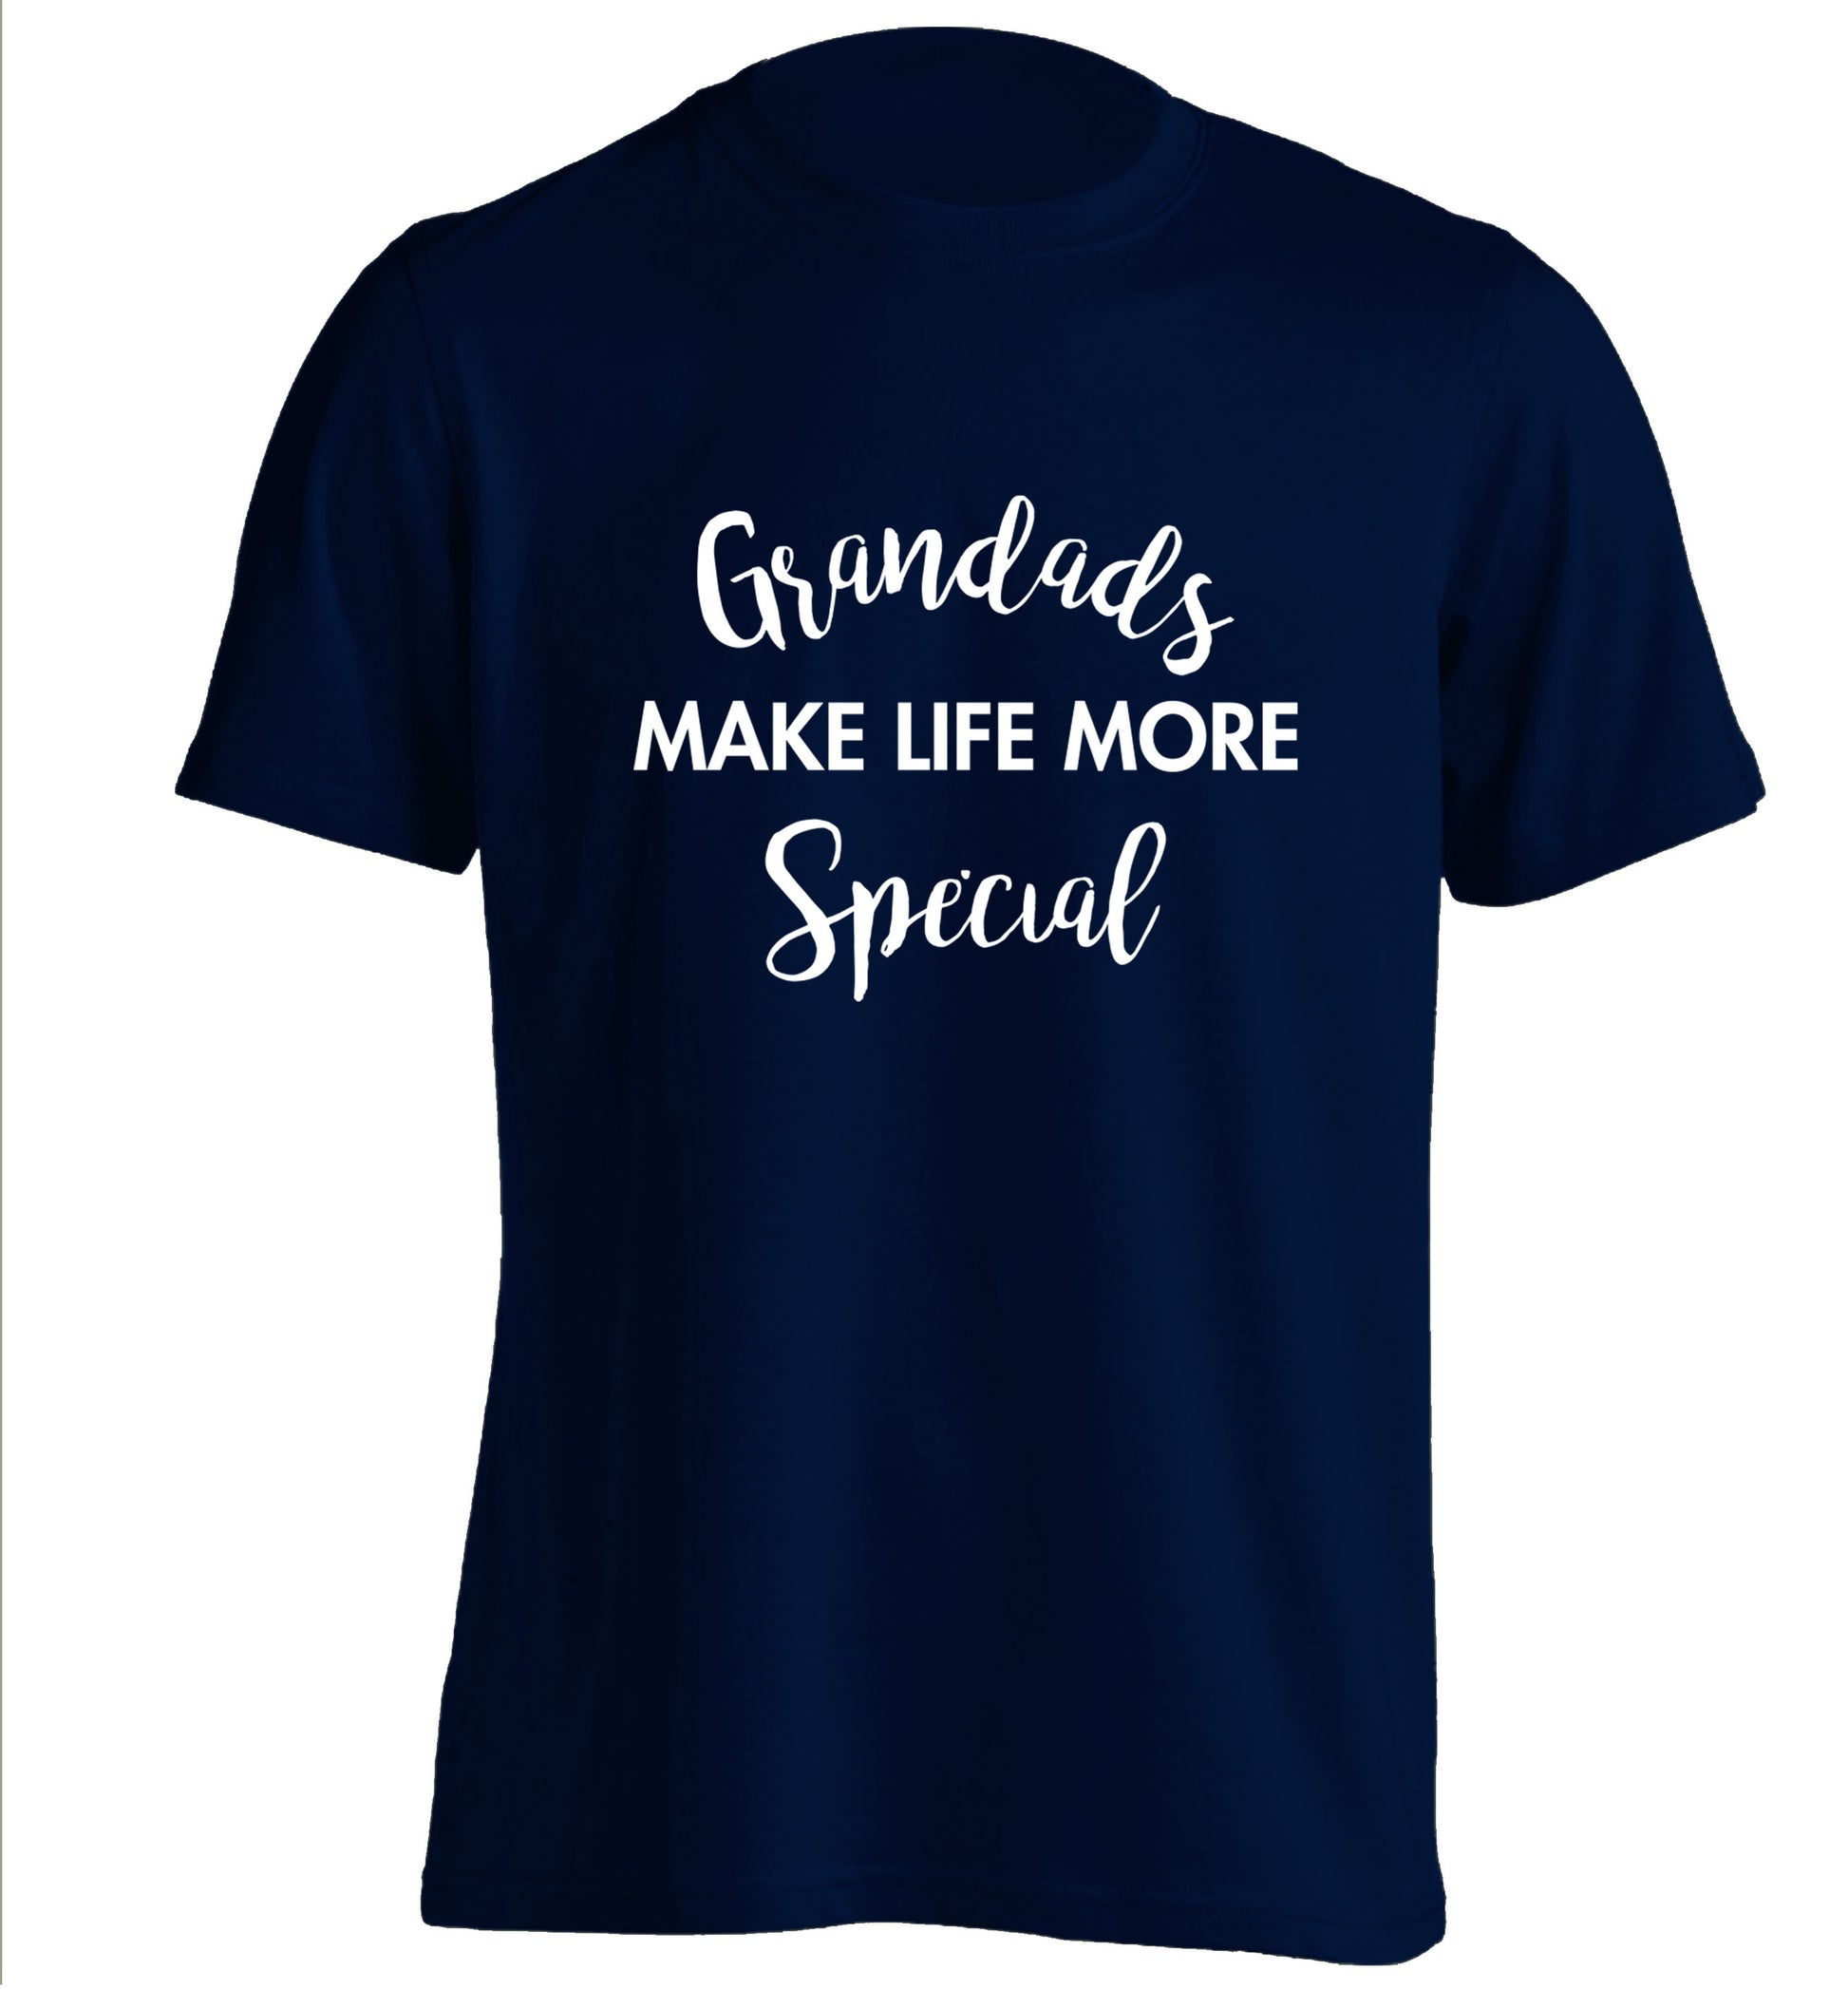 Grandads make life more special adults unisex navy Tshirt 2XL